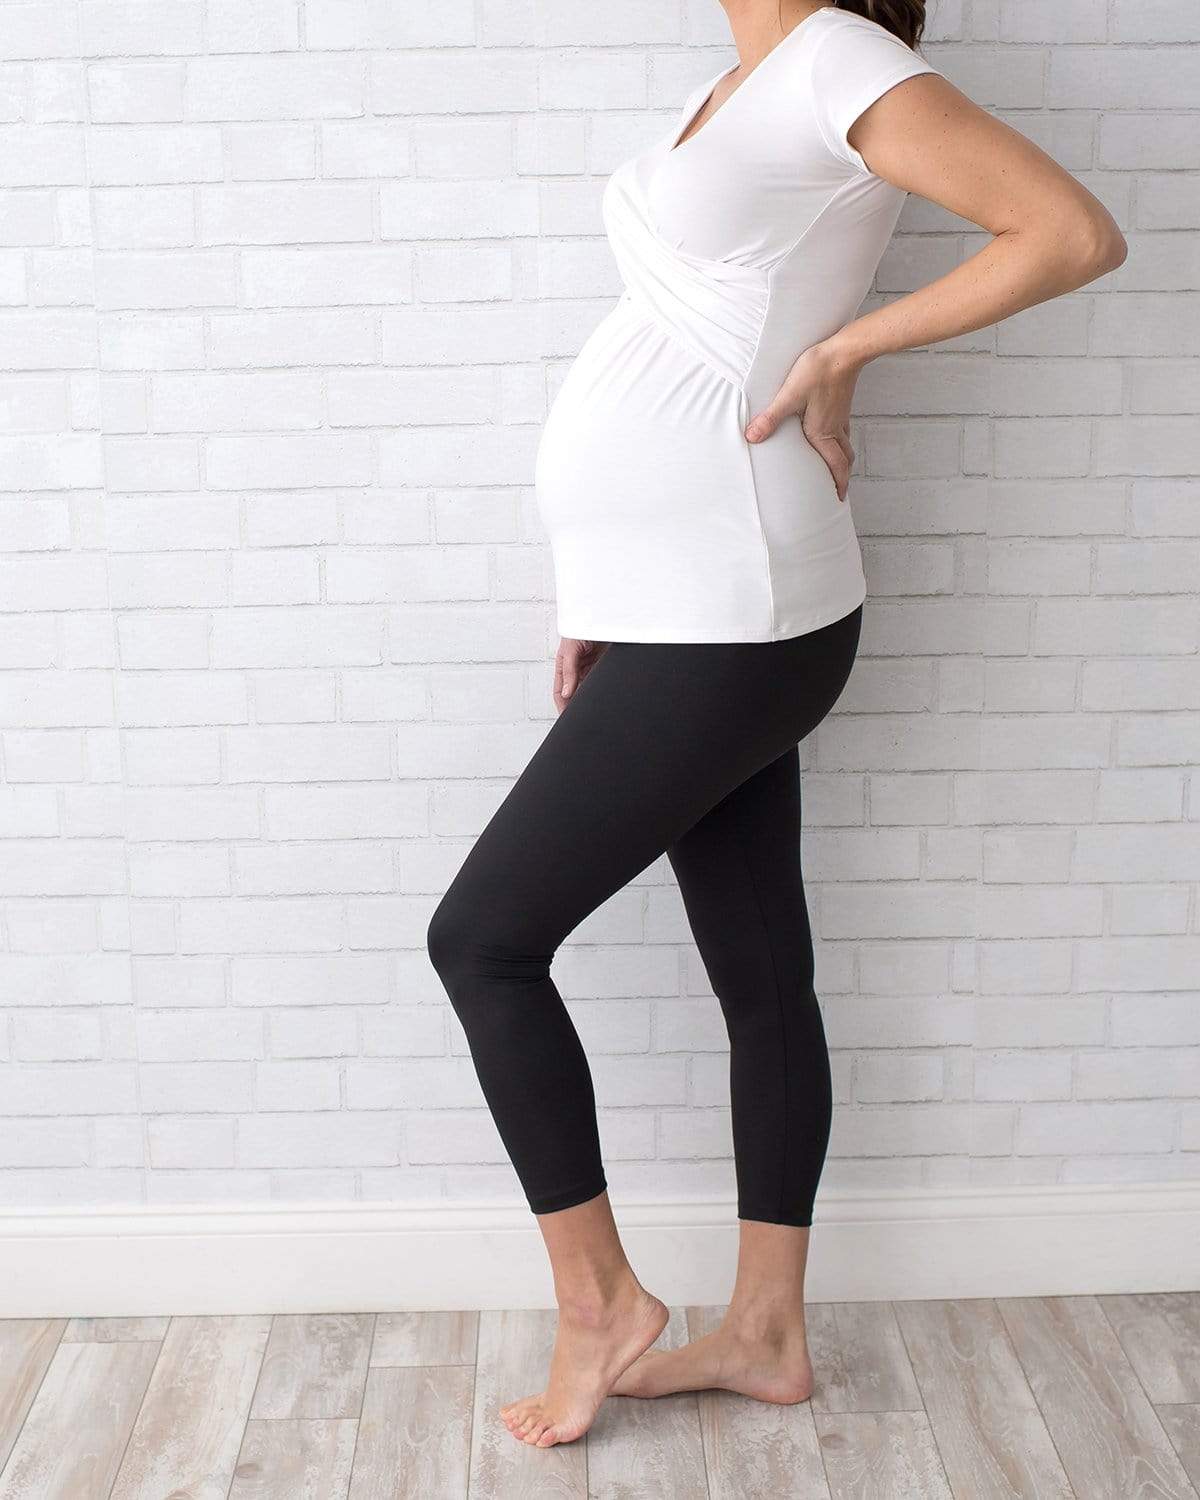 Maternity Cropped Leggings With Pockets 3/4 Length High Waist Sizes 8 - 22  LCKP | eBay